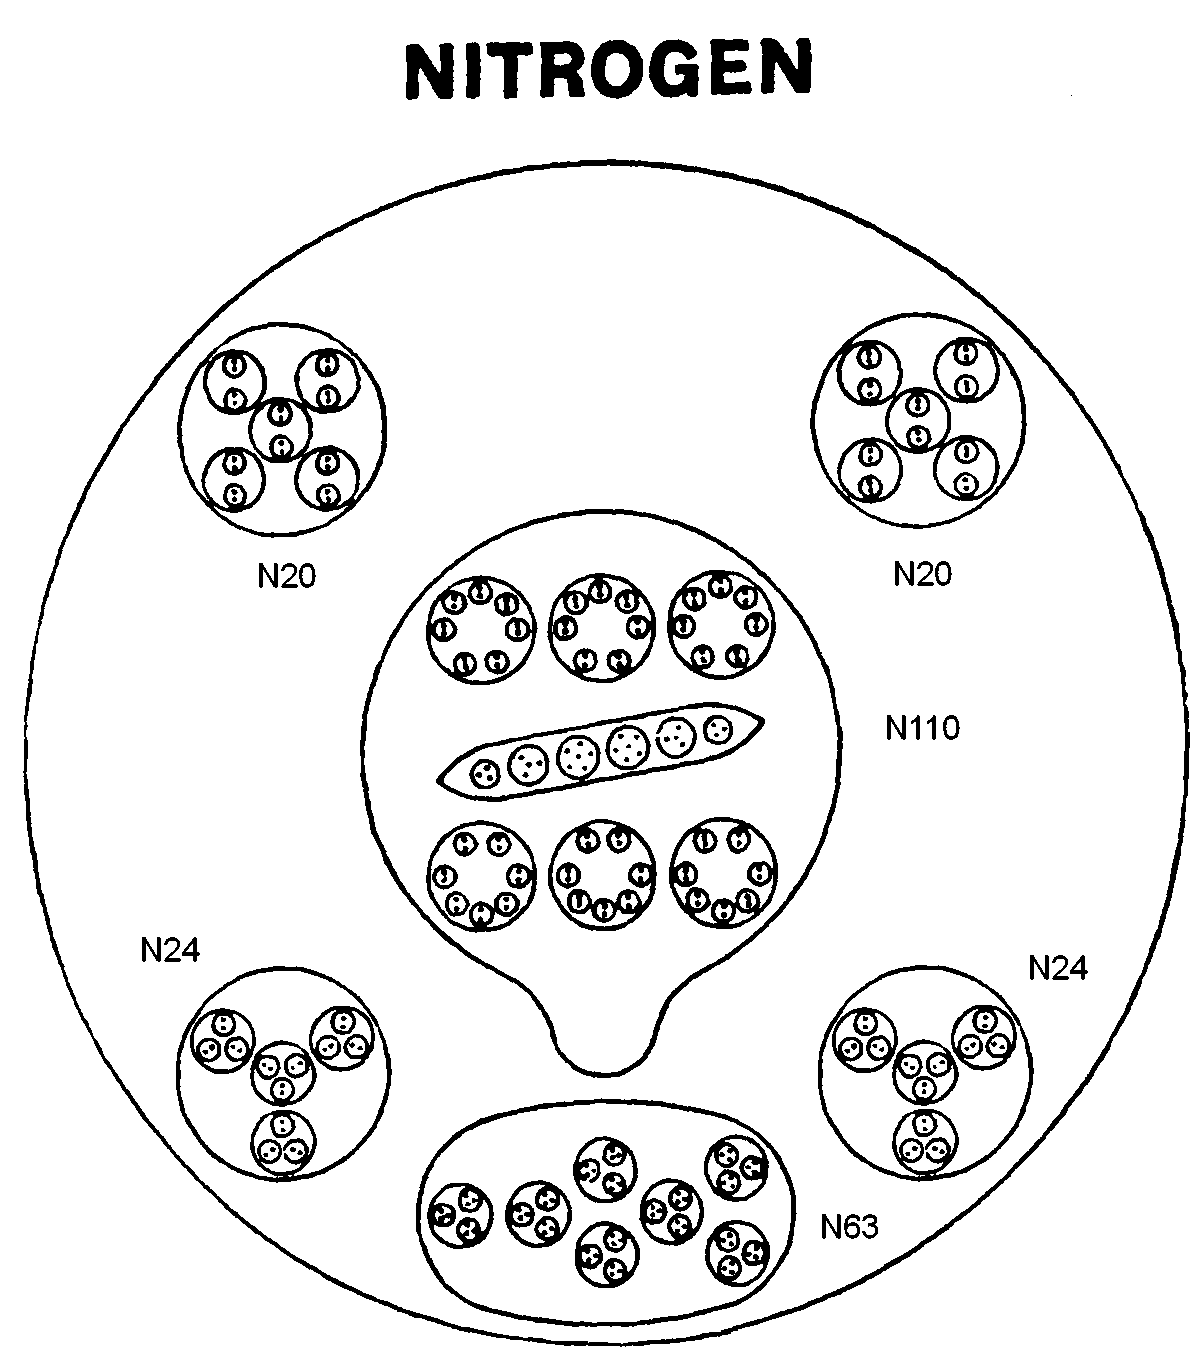 Nitrogen MPA